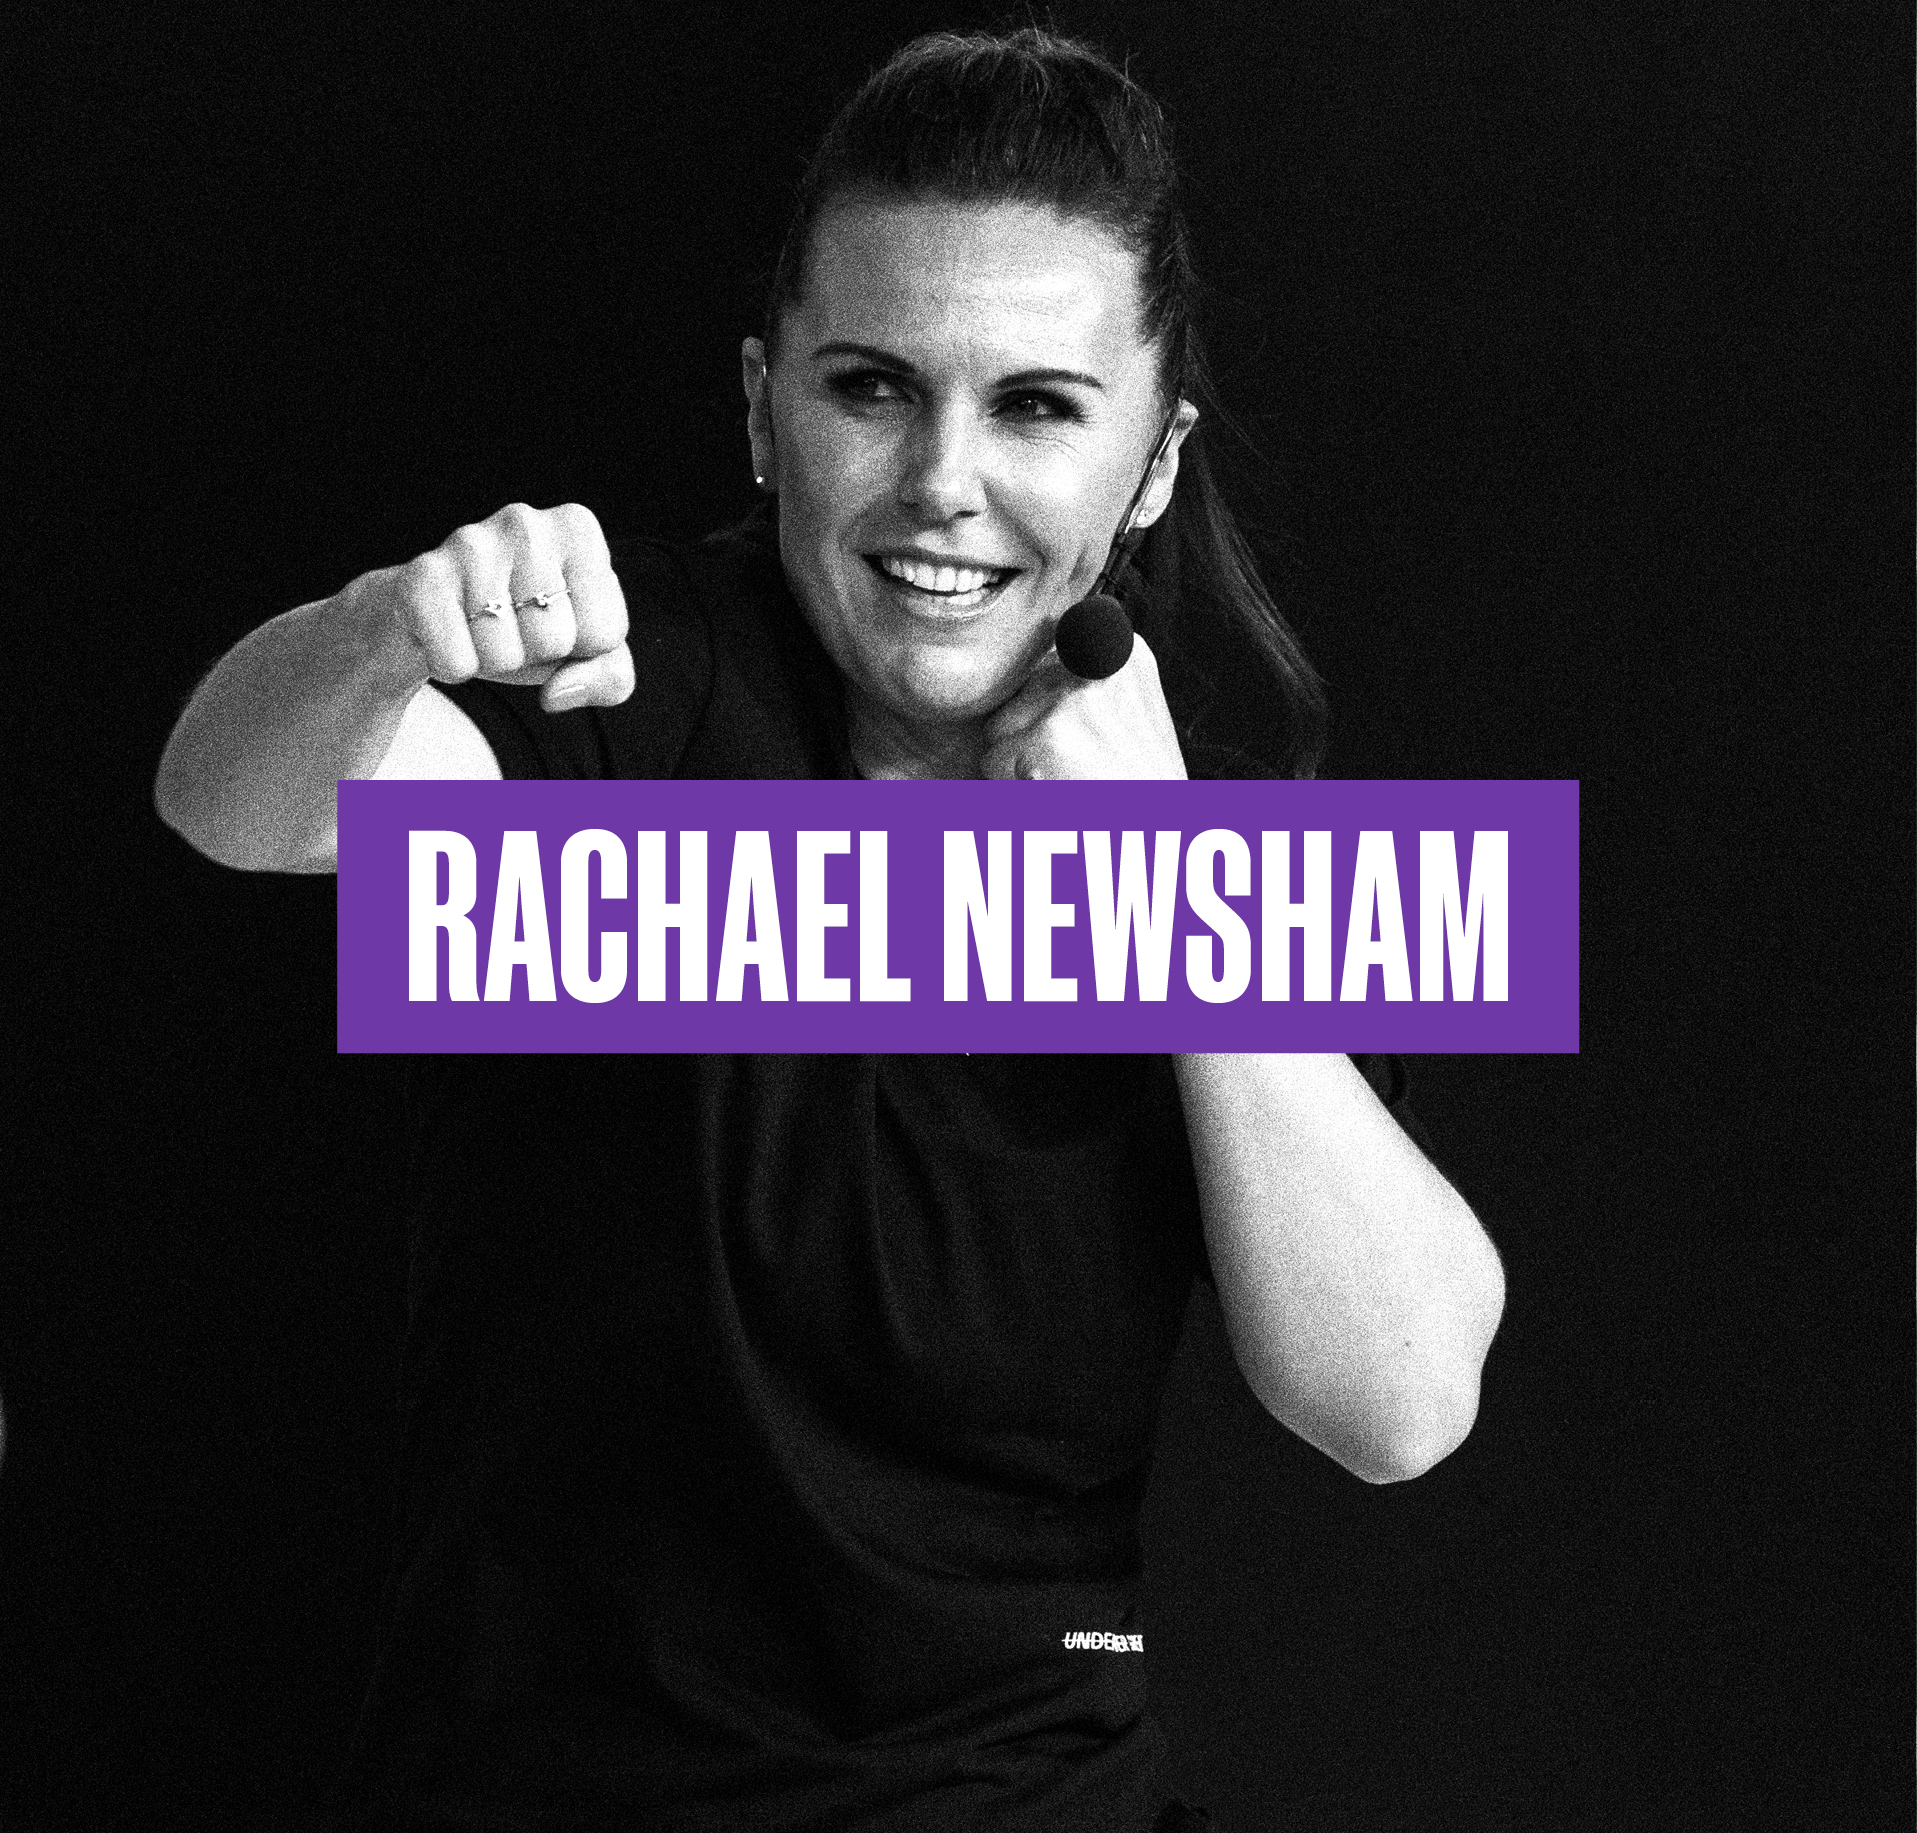 Rachael Newsham